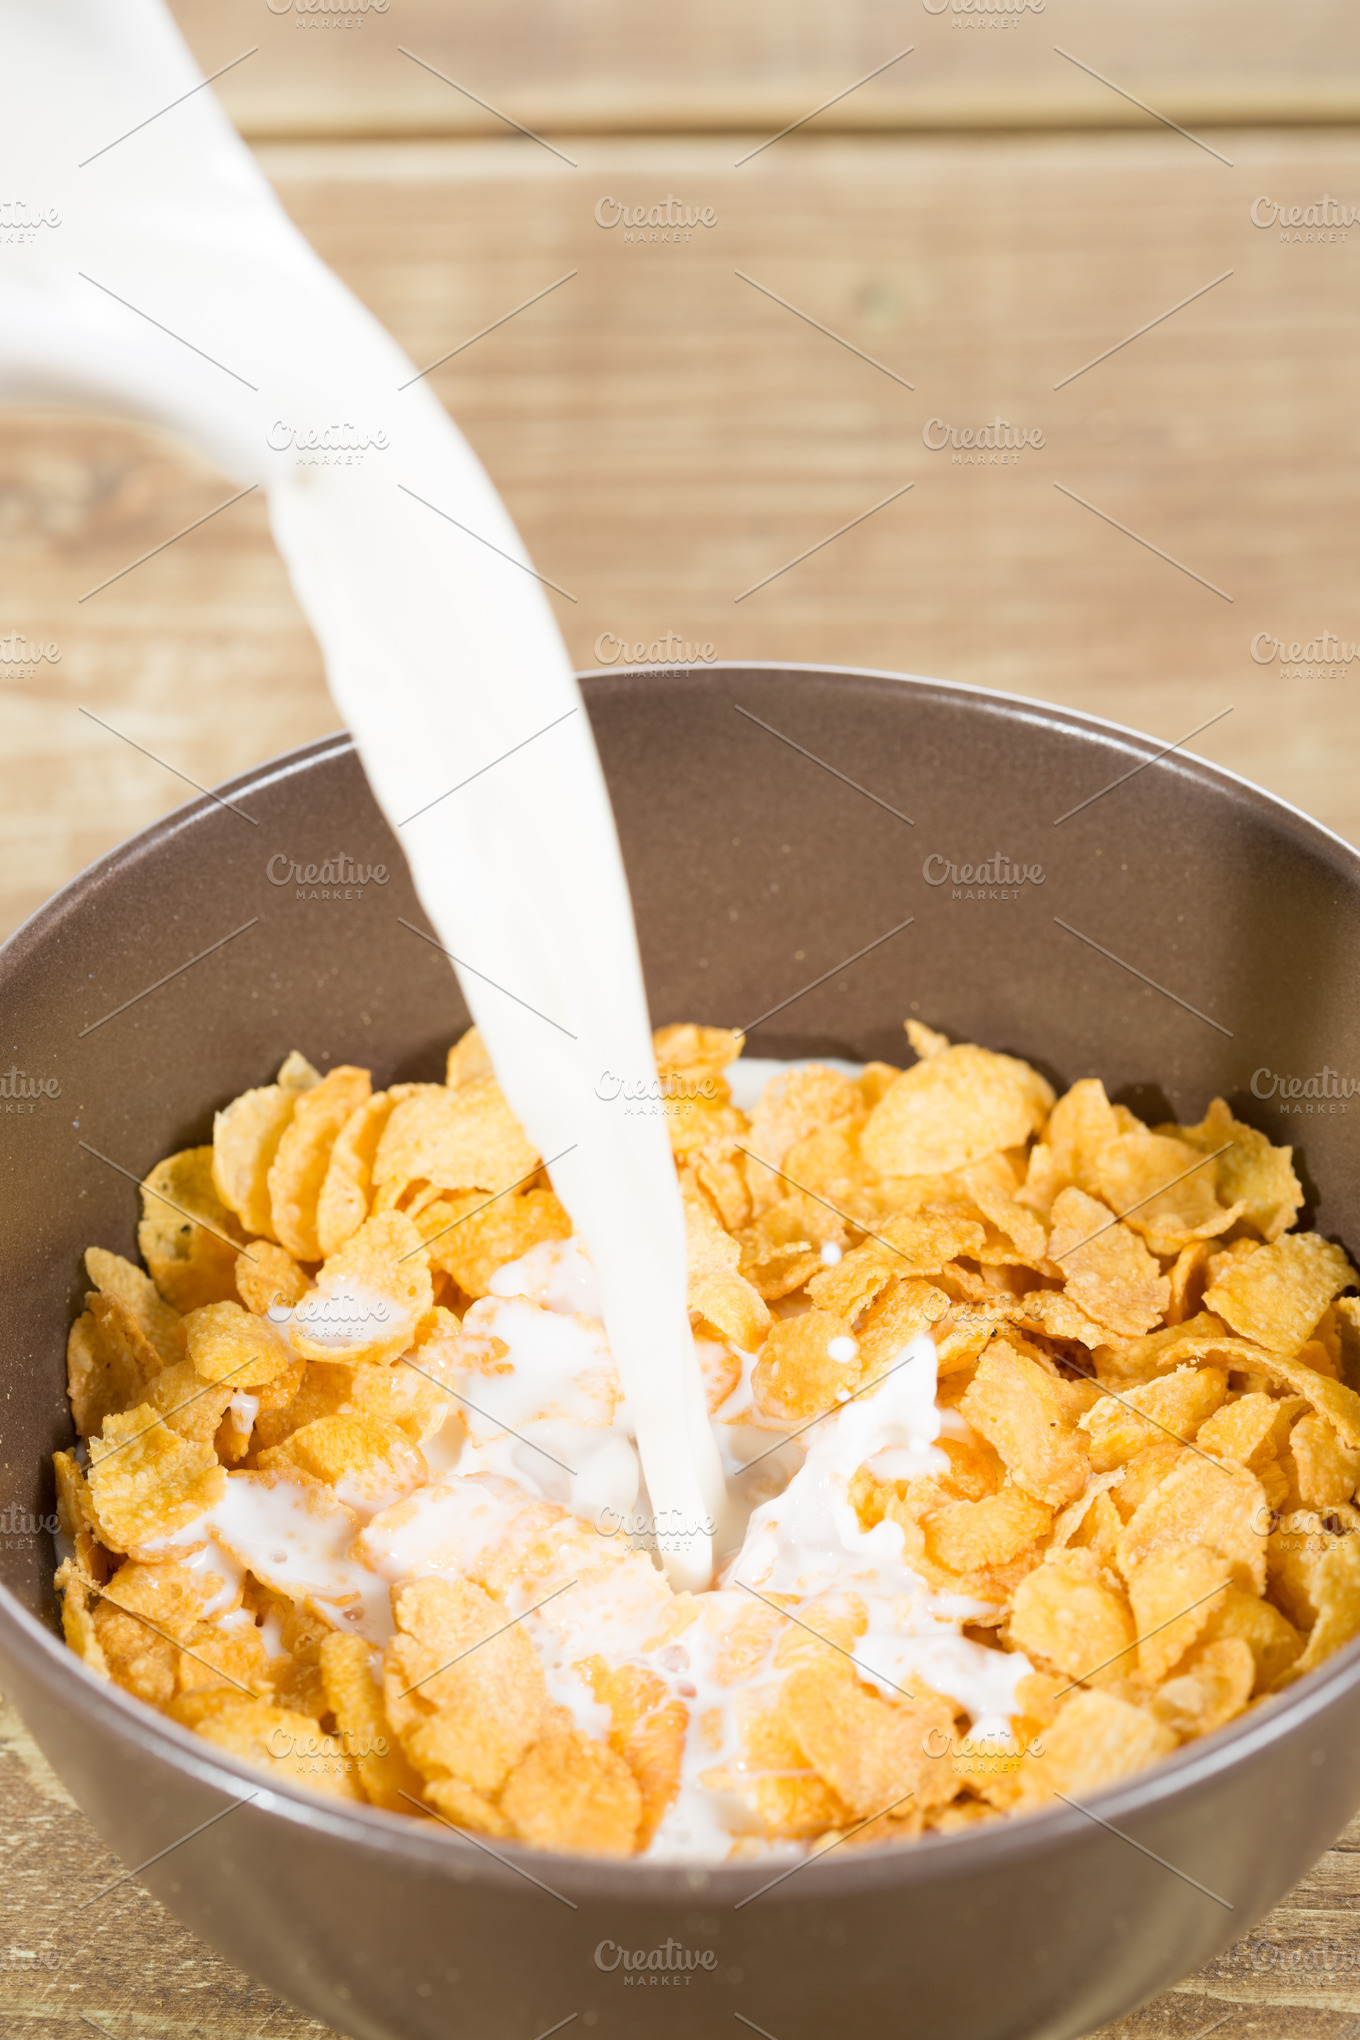 Milk with cereals ~ Food & Drink Photos ~ Creative Market